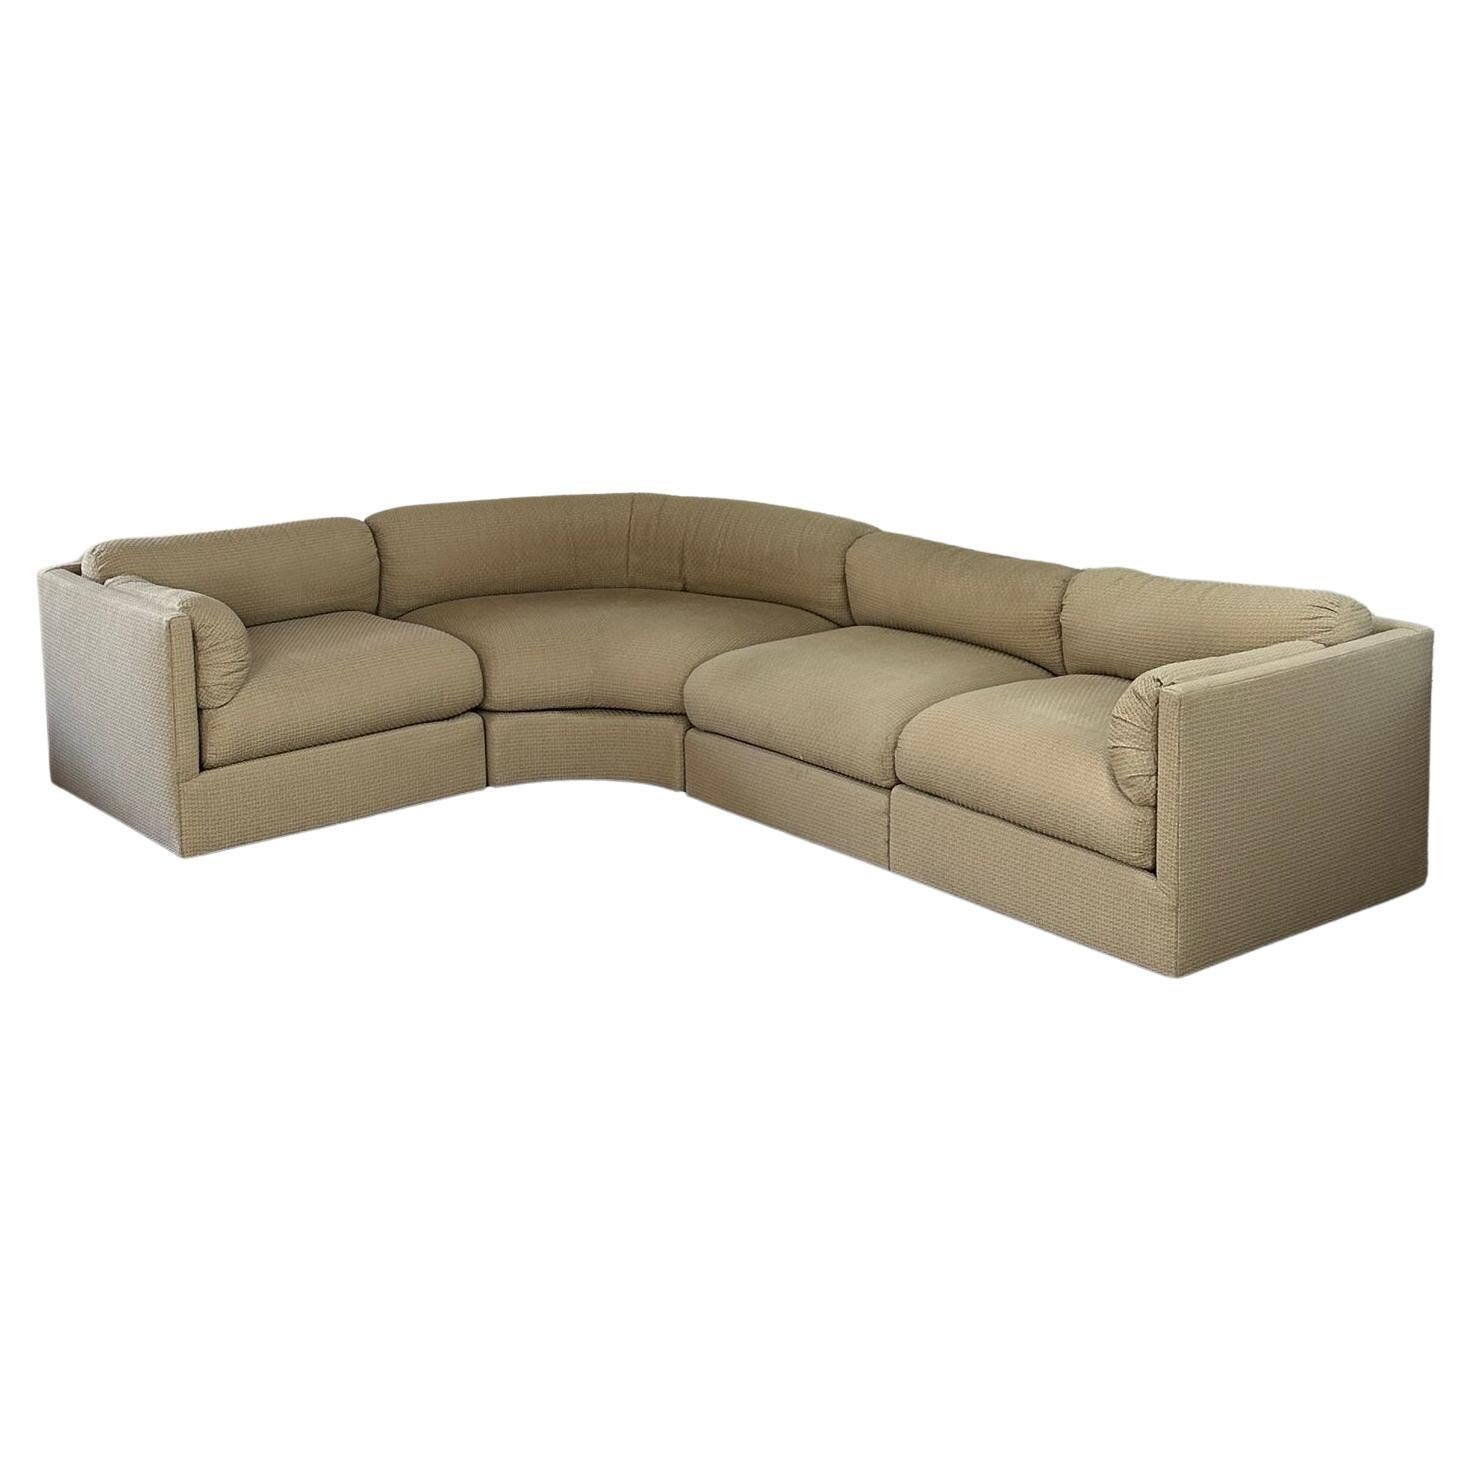 Modular Curved Post Modern Sofa